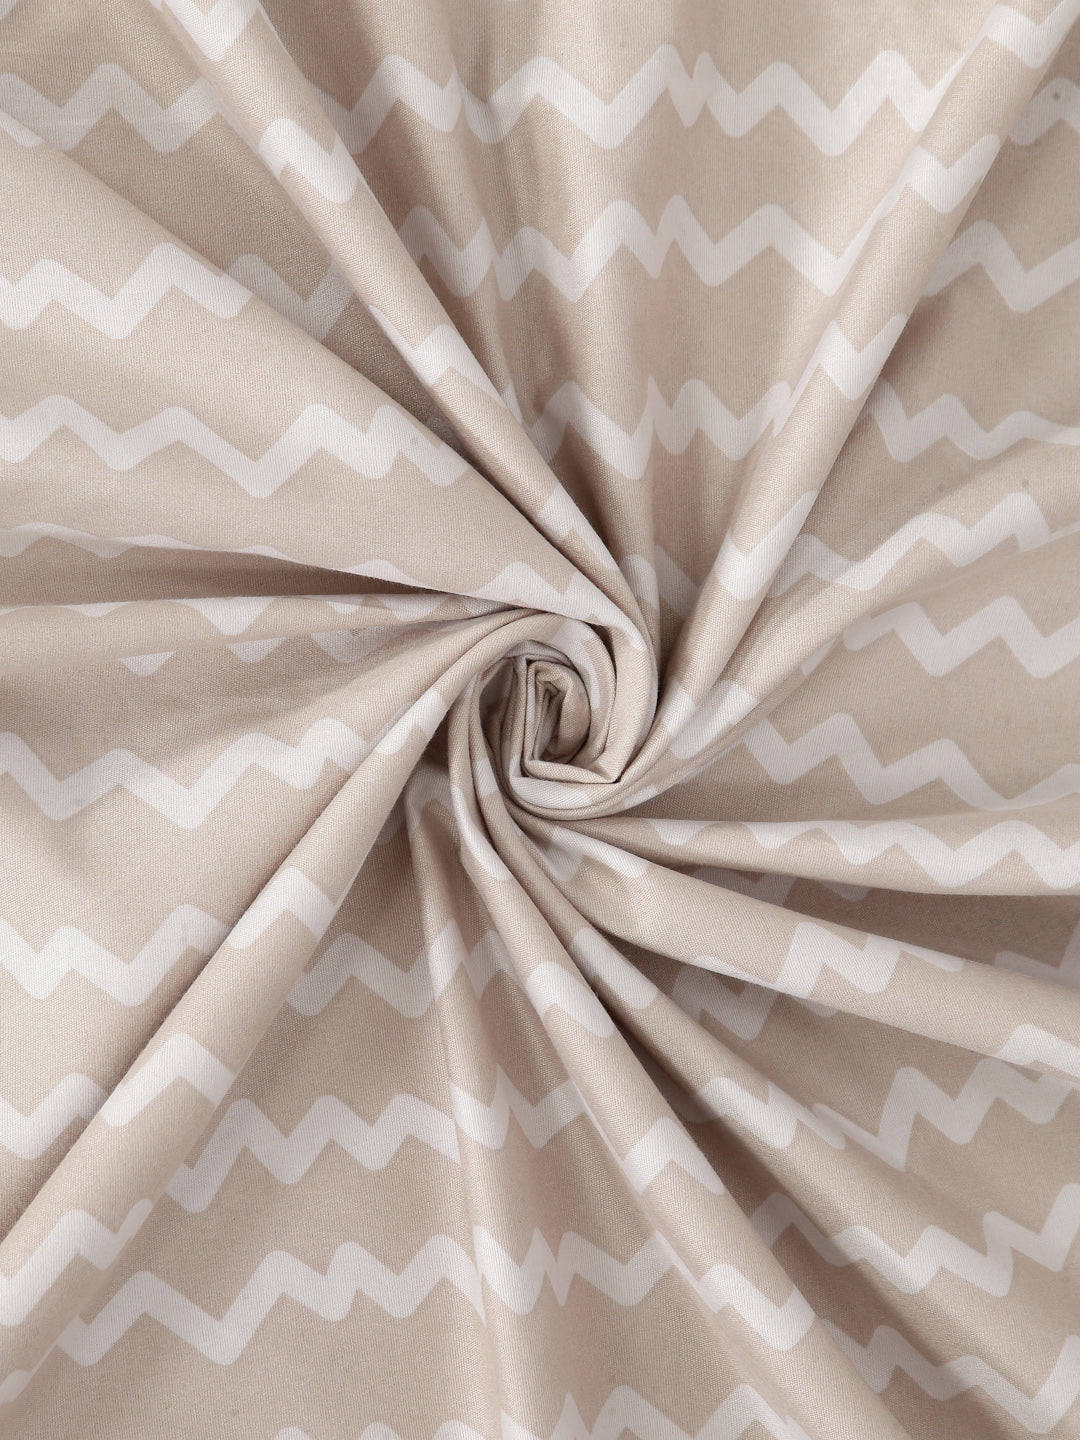 Arrabi Brown Stripes TC Cotton Blend King Size Bedsheet with 2 Pillow Covers (250 X 215 cm)